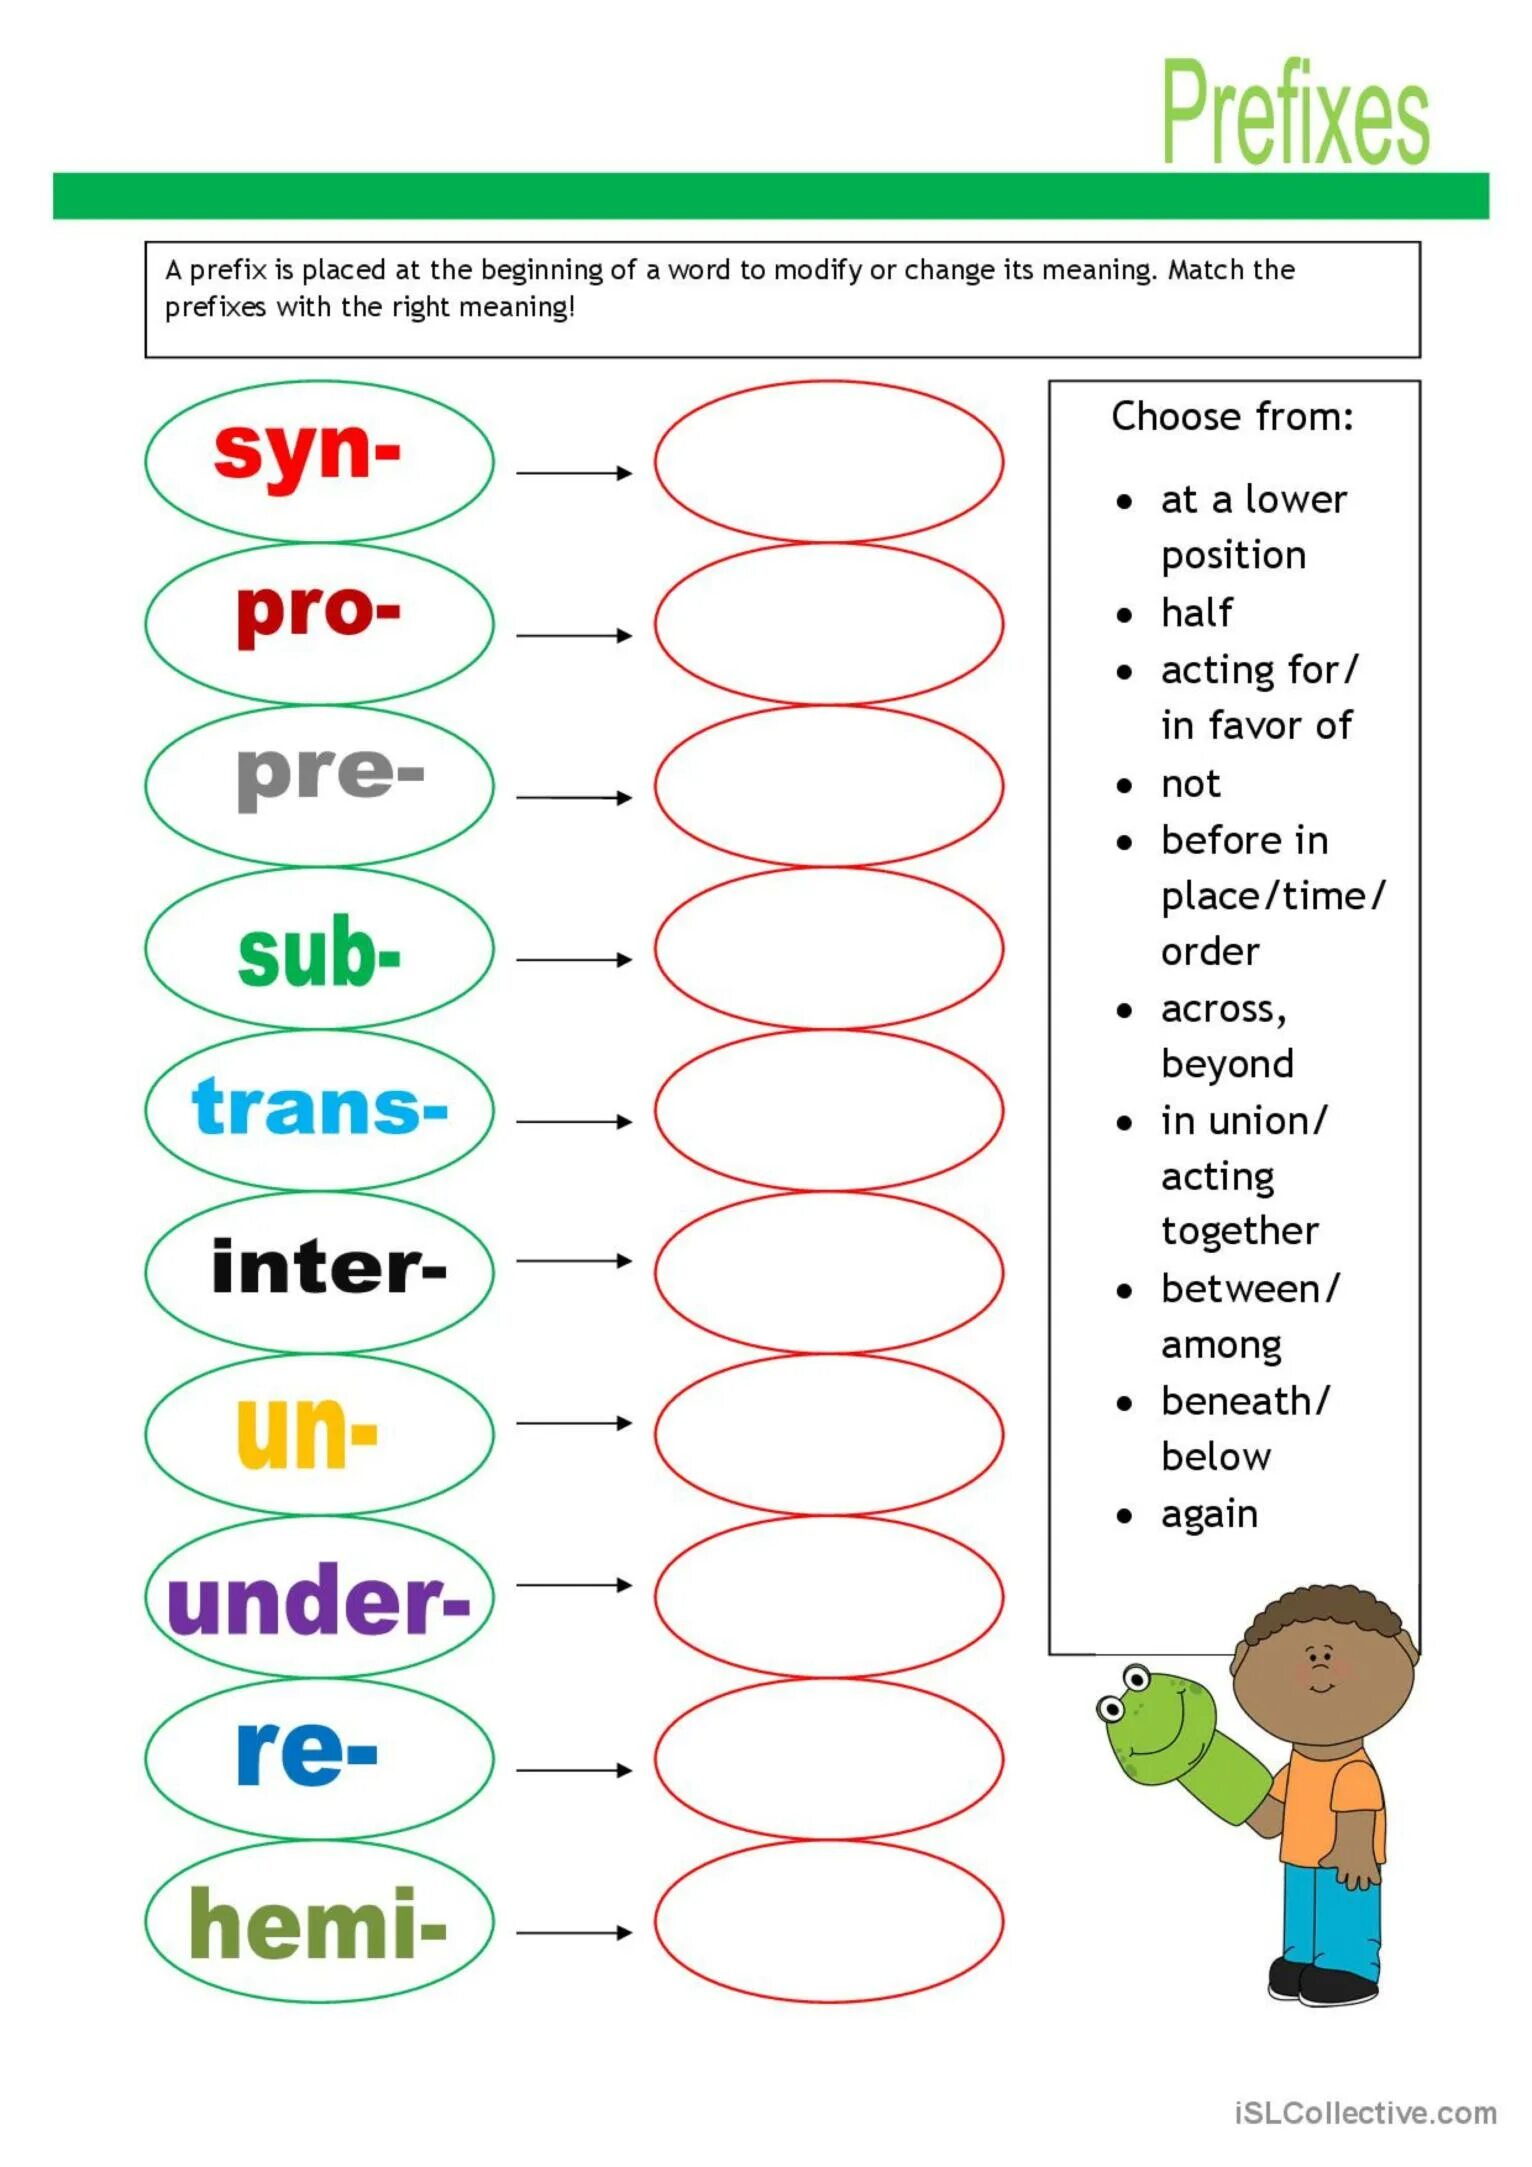 Prefixes in english. Prefix в английском языке упражнения. Prefixes упражнения. Словообразование Worksheets. Prefixes un in English.